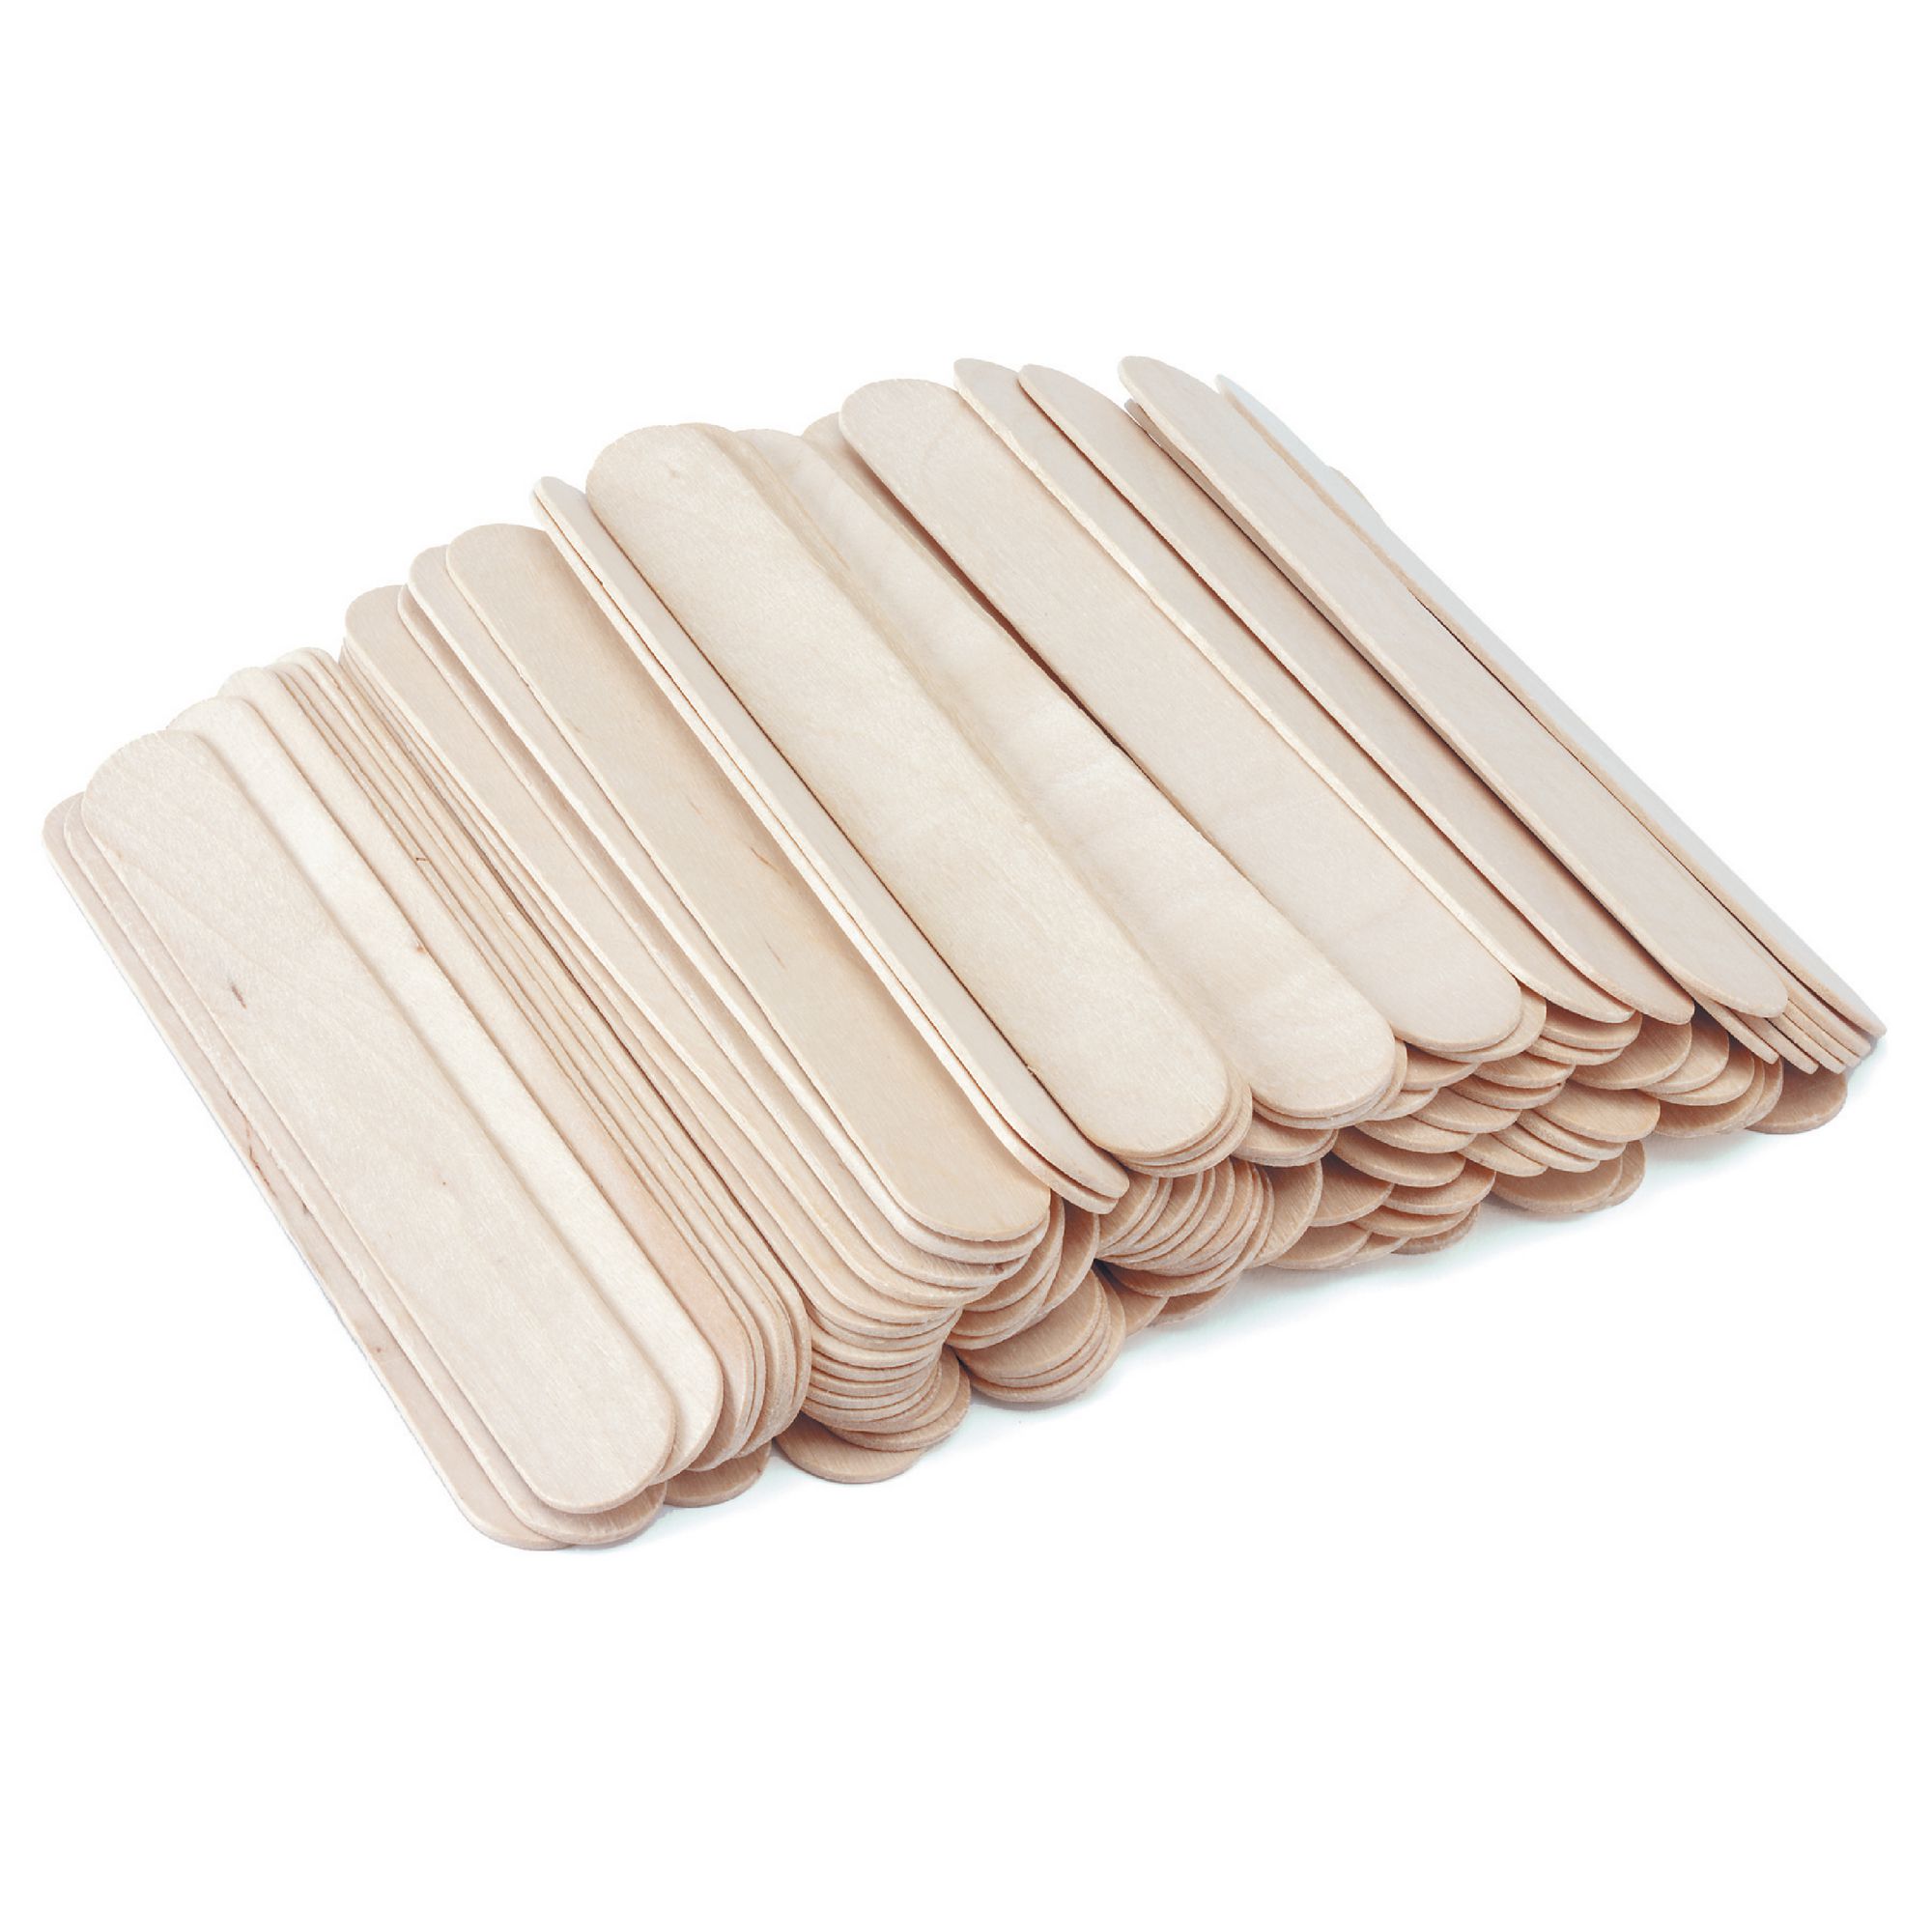 100 Plain Jumbo Craft Sticks